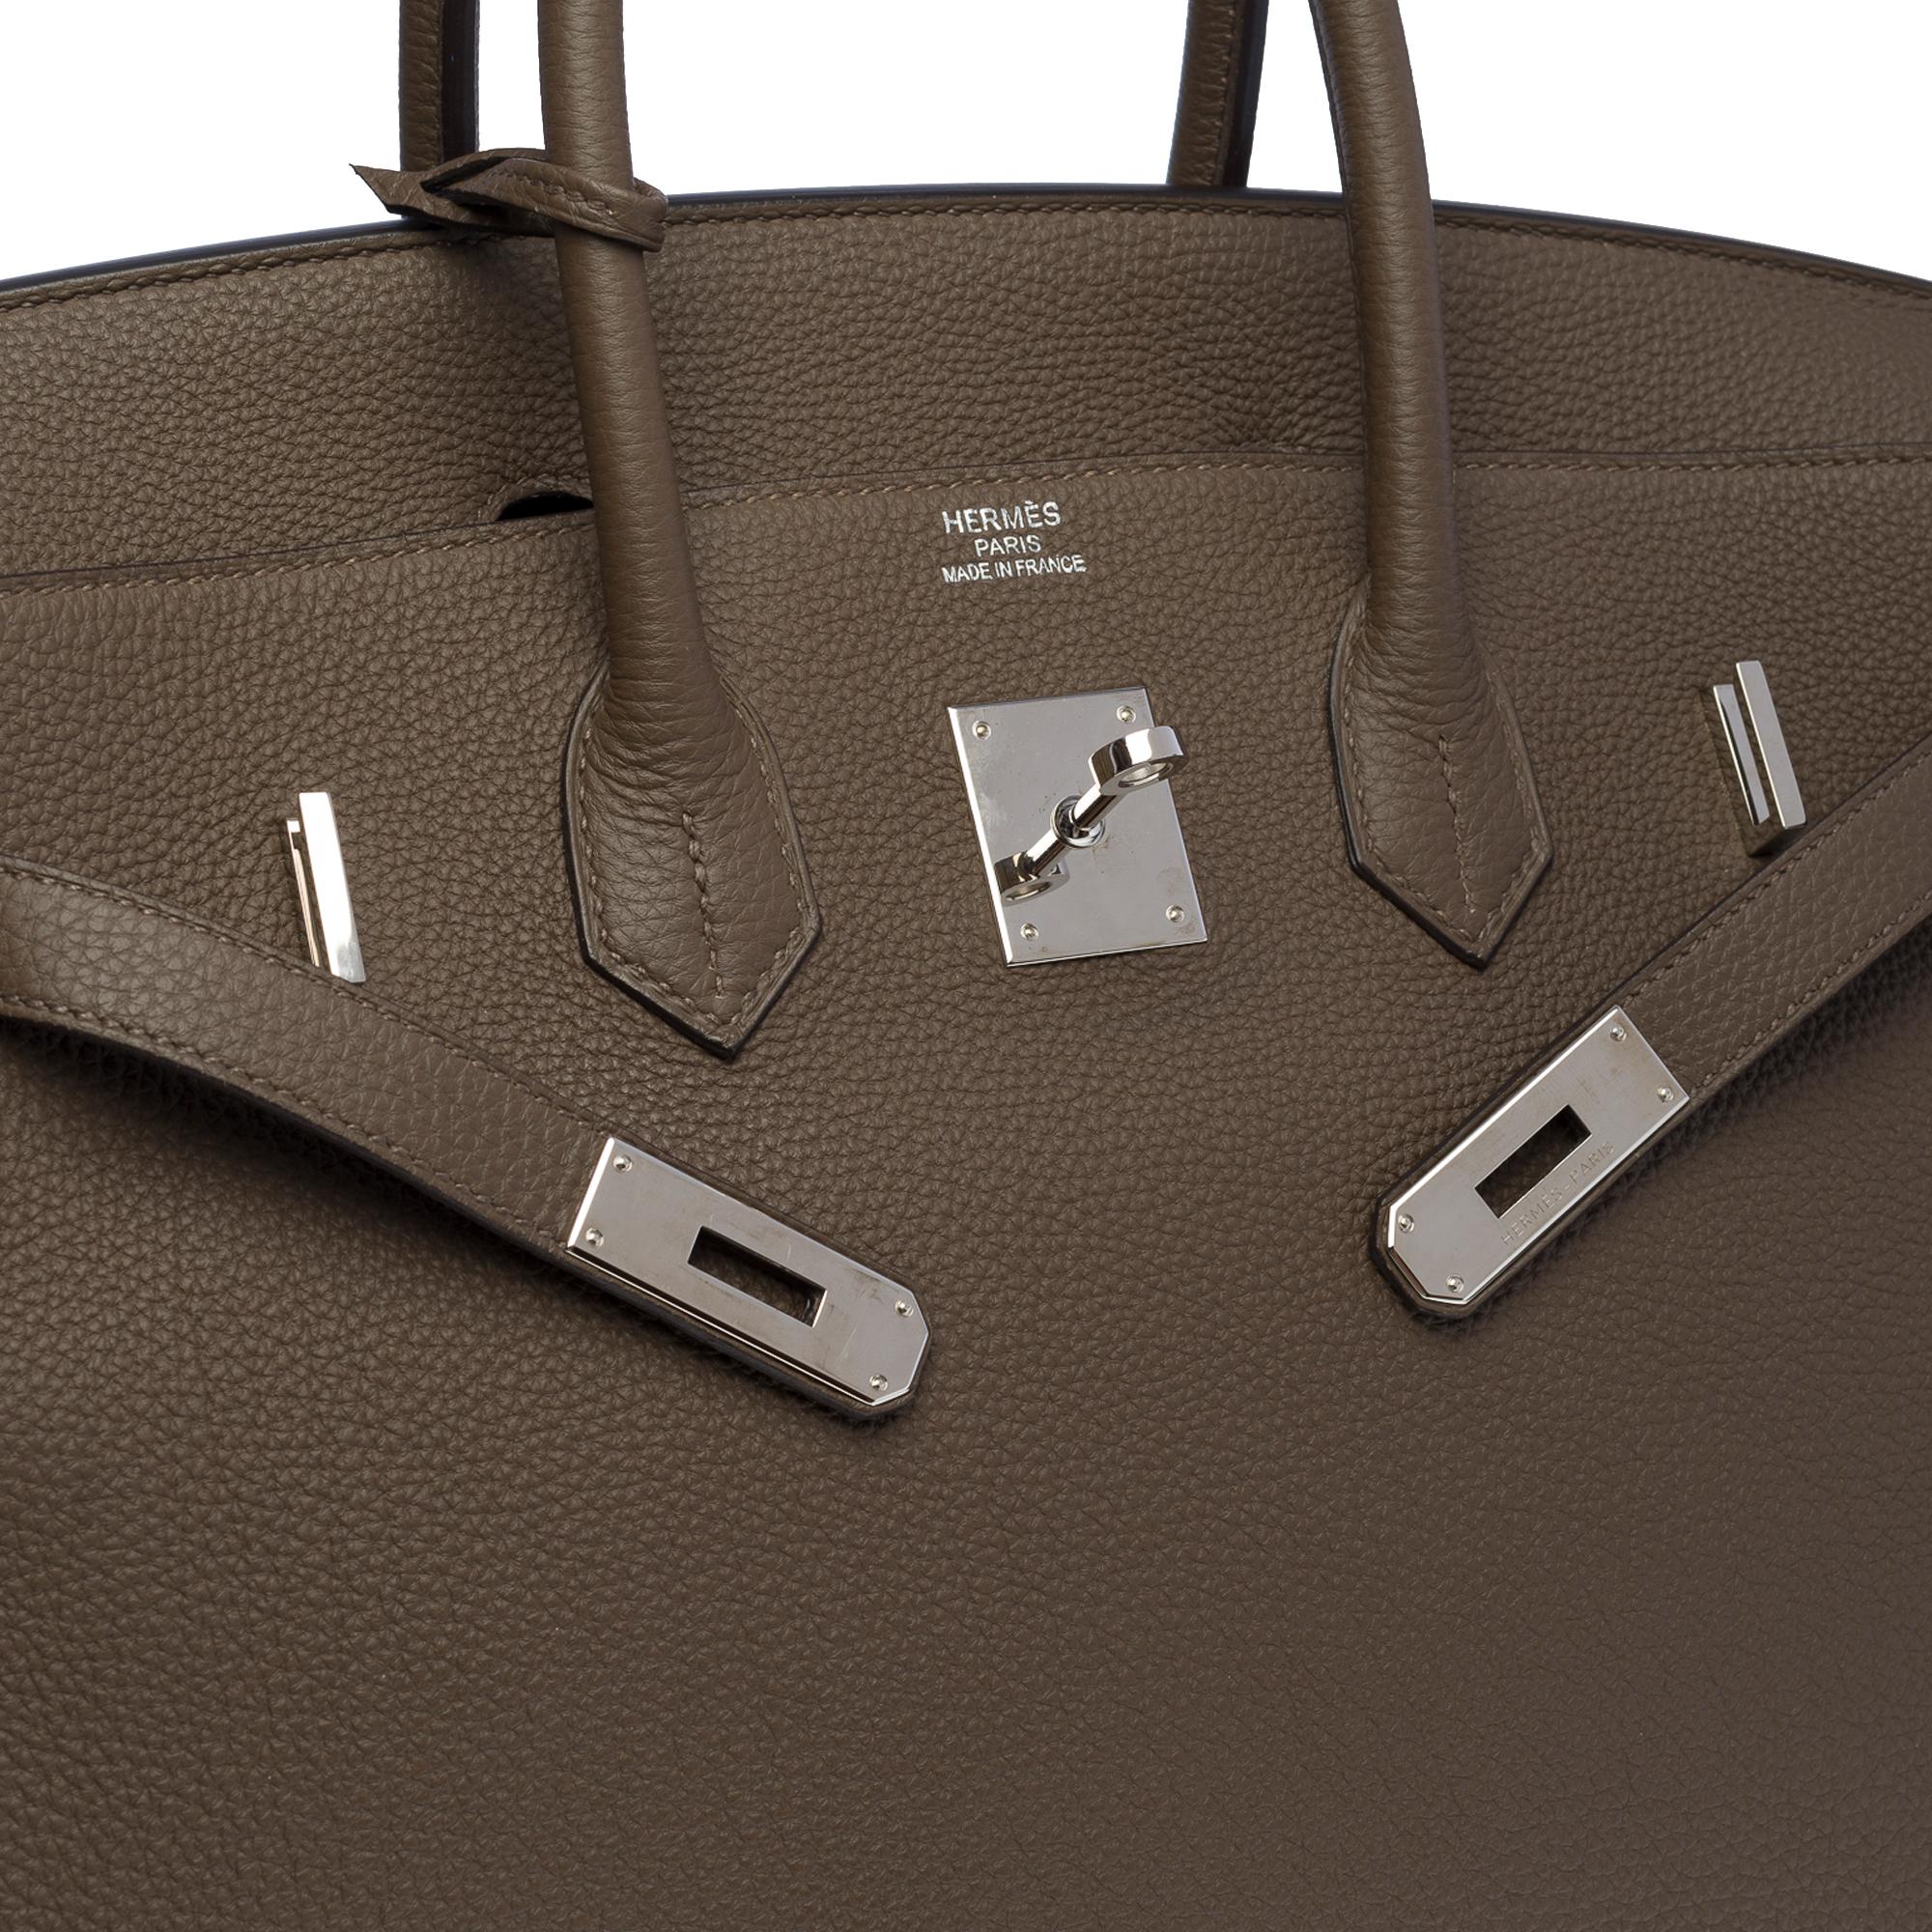 Magnificent Hermès Birkin 35 handbag in Gris Elephant Togo leather, SHW 2